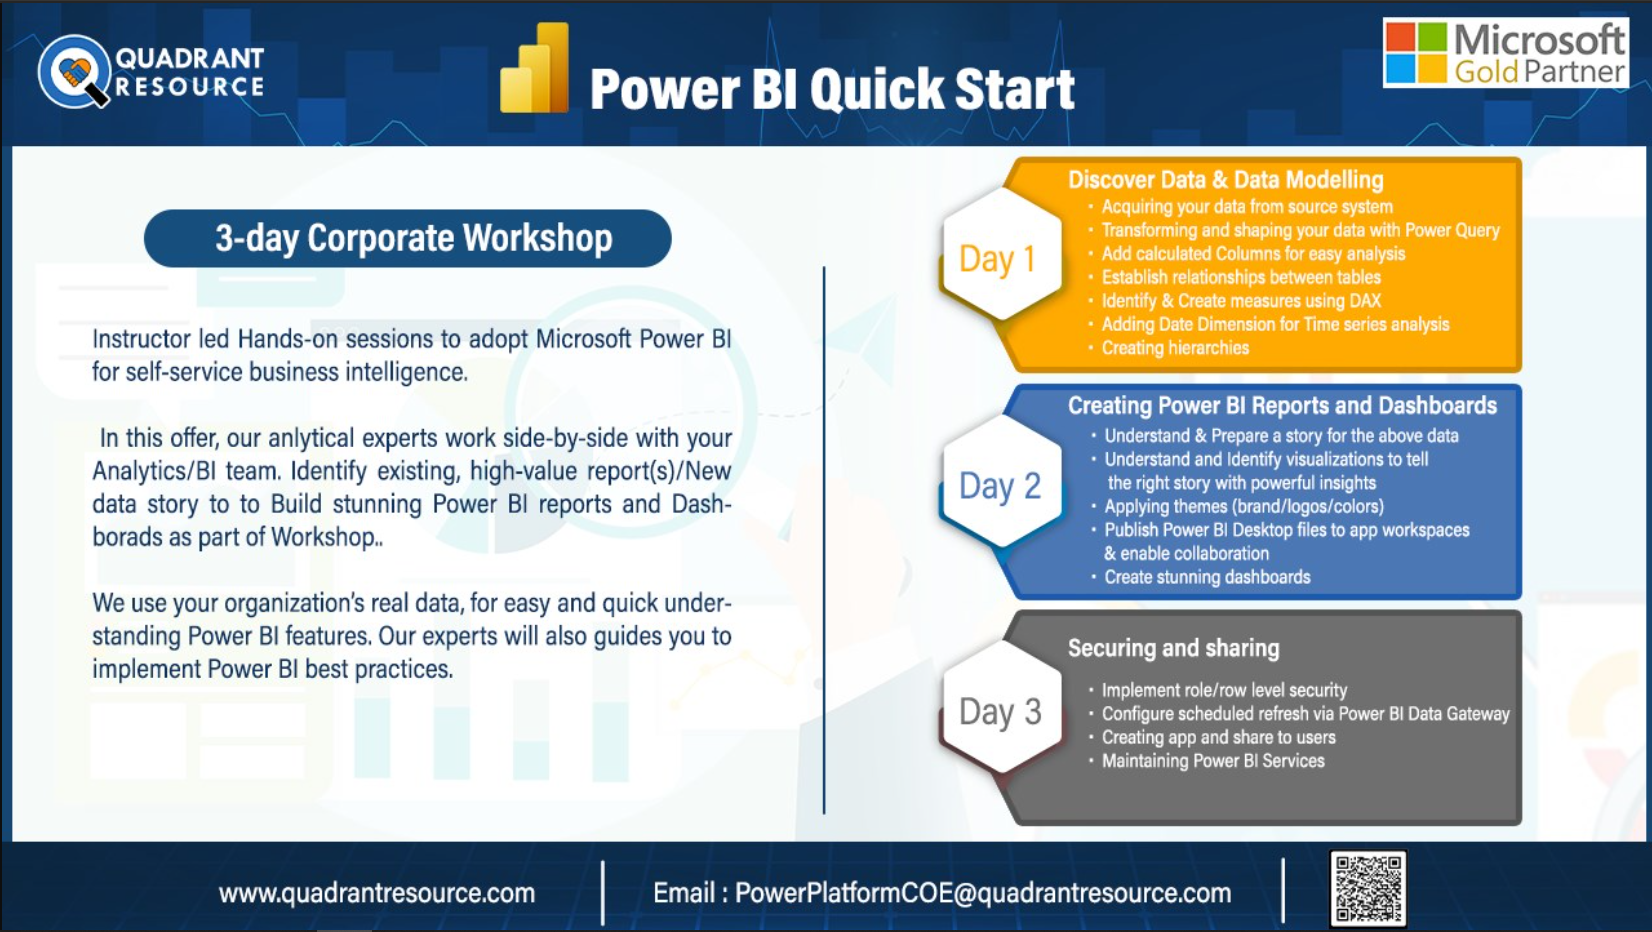 Power BI Quick Start: 3-day Corporate Workshop